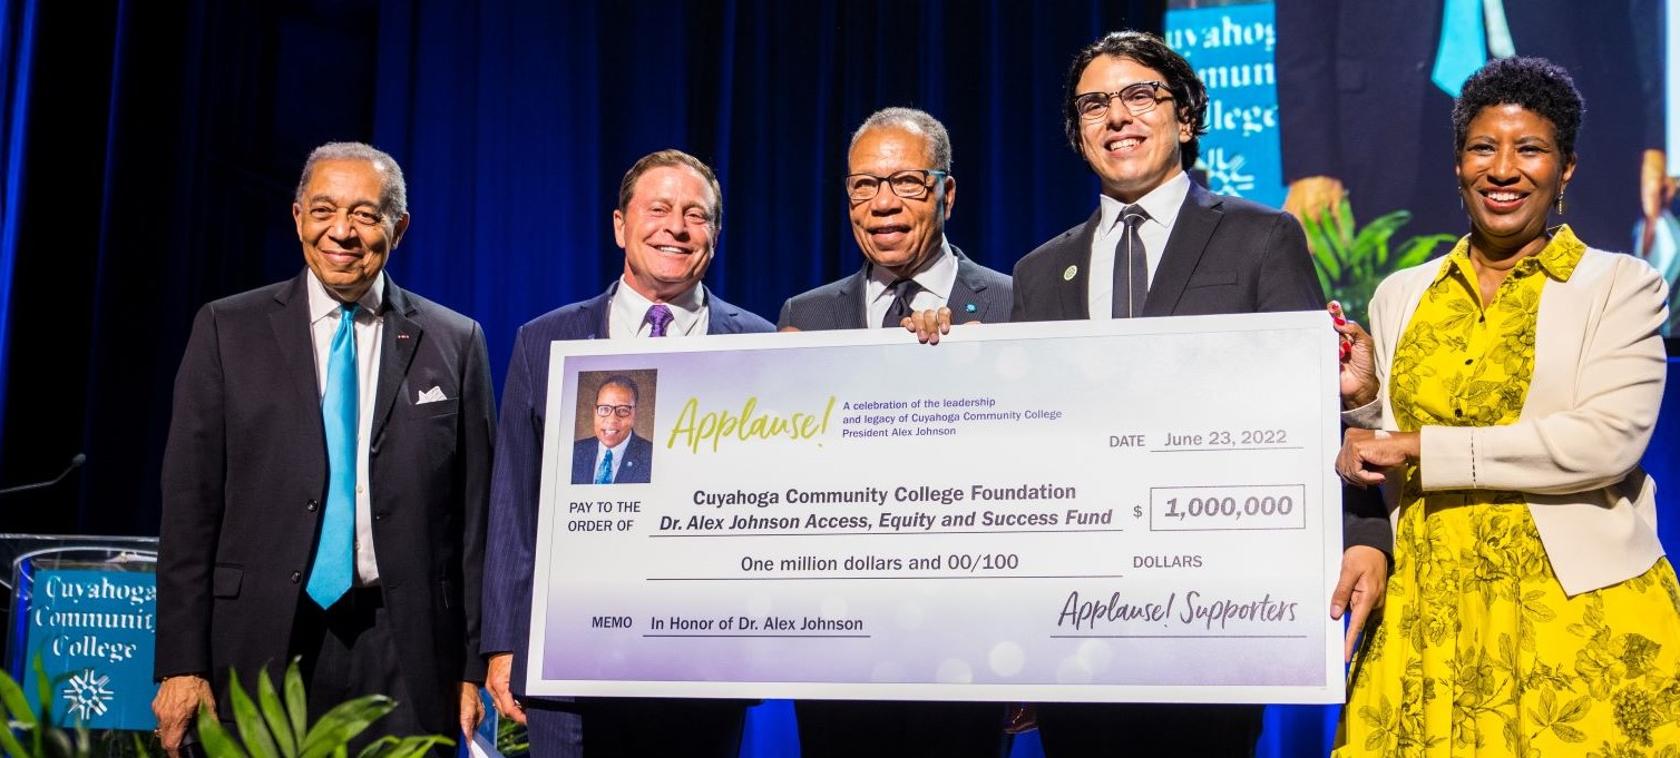 Alex Johnson Gala Event Raises $1 million for Student Support